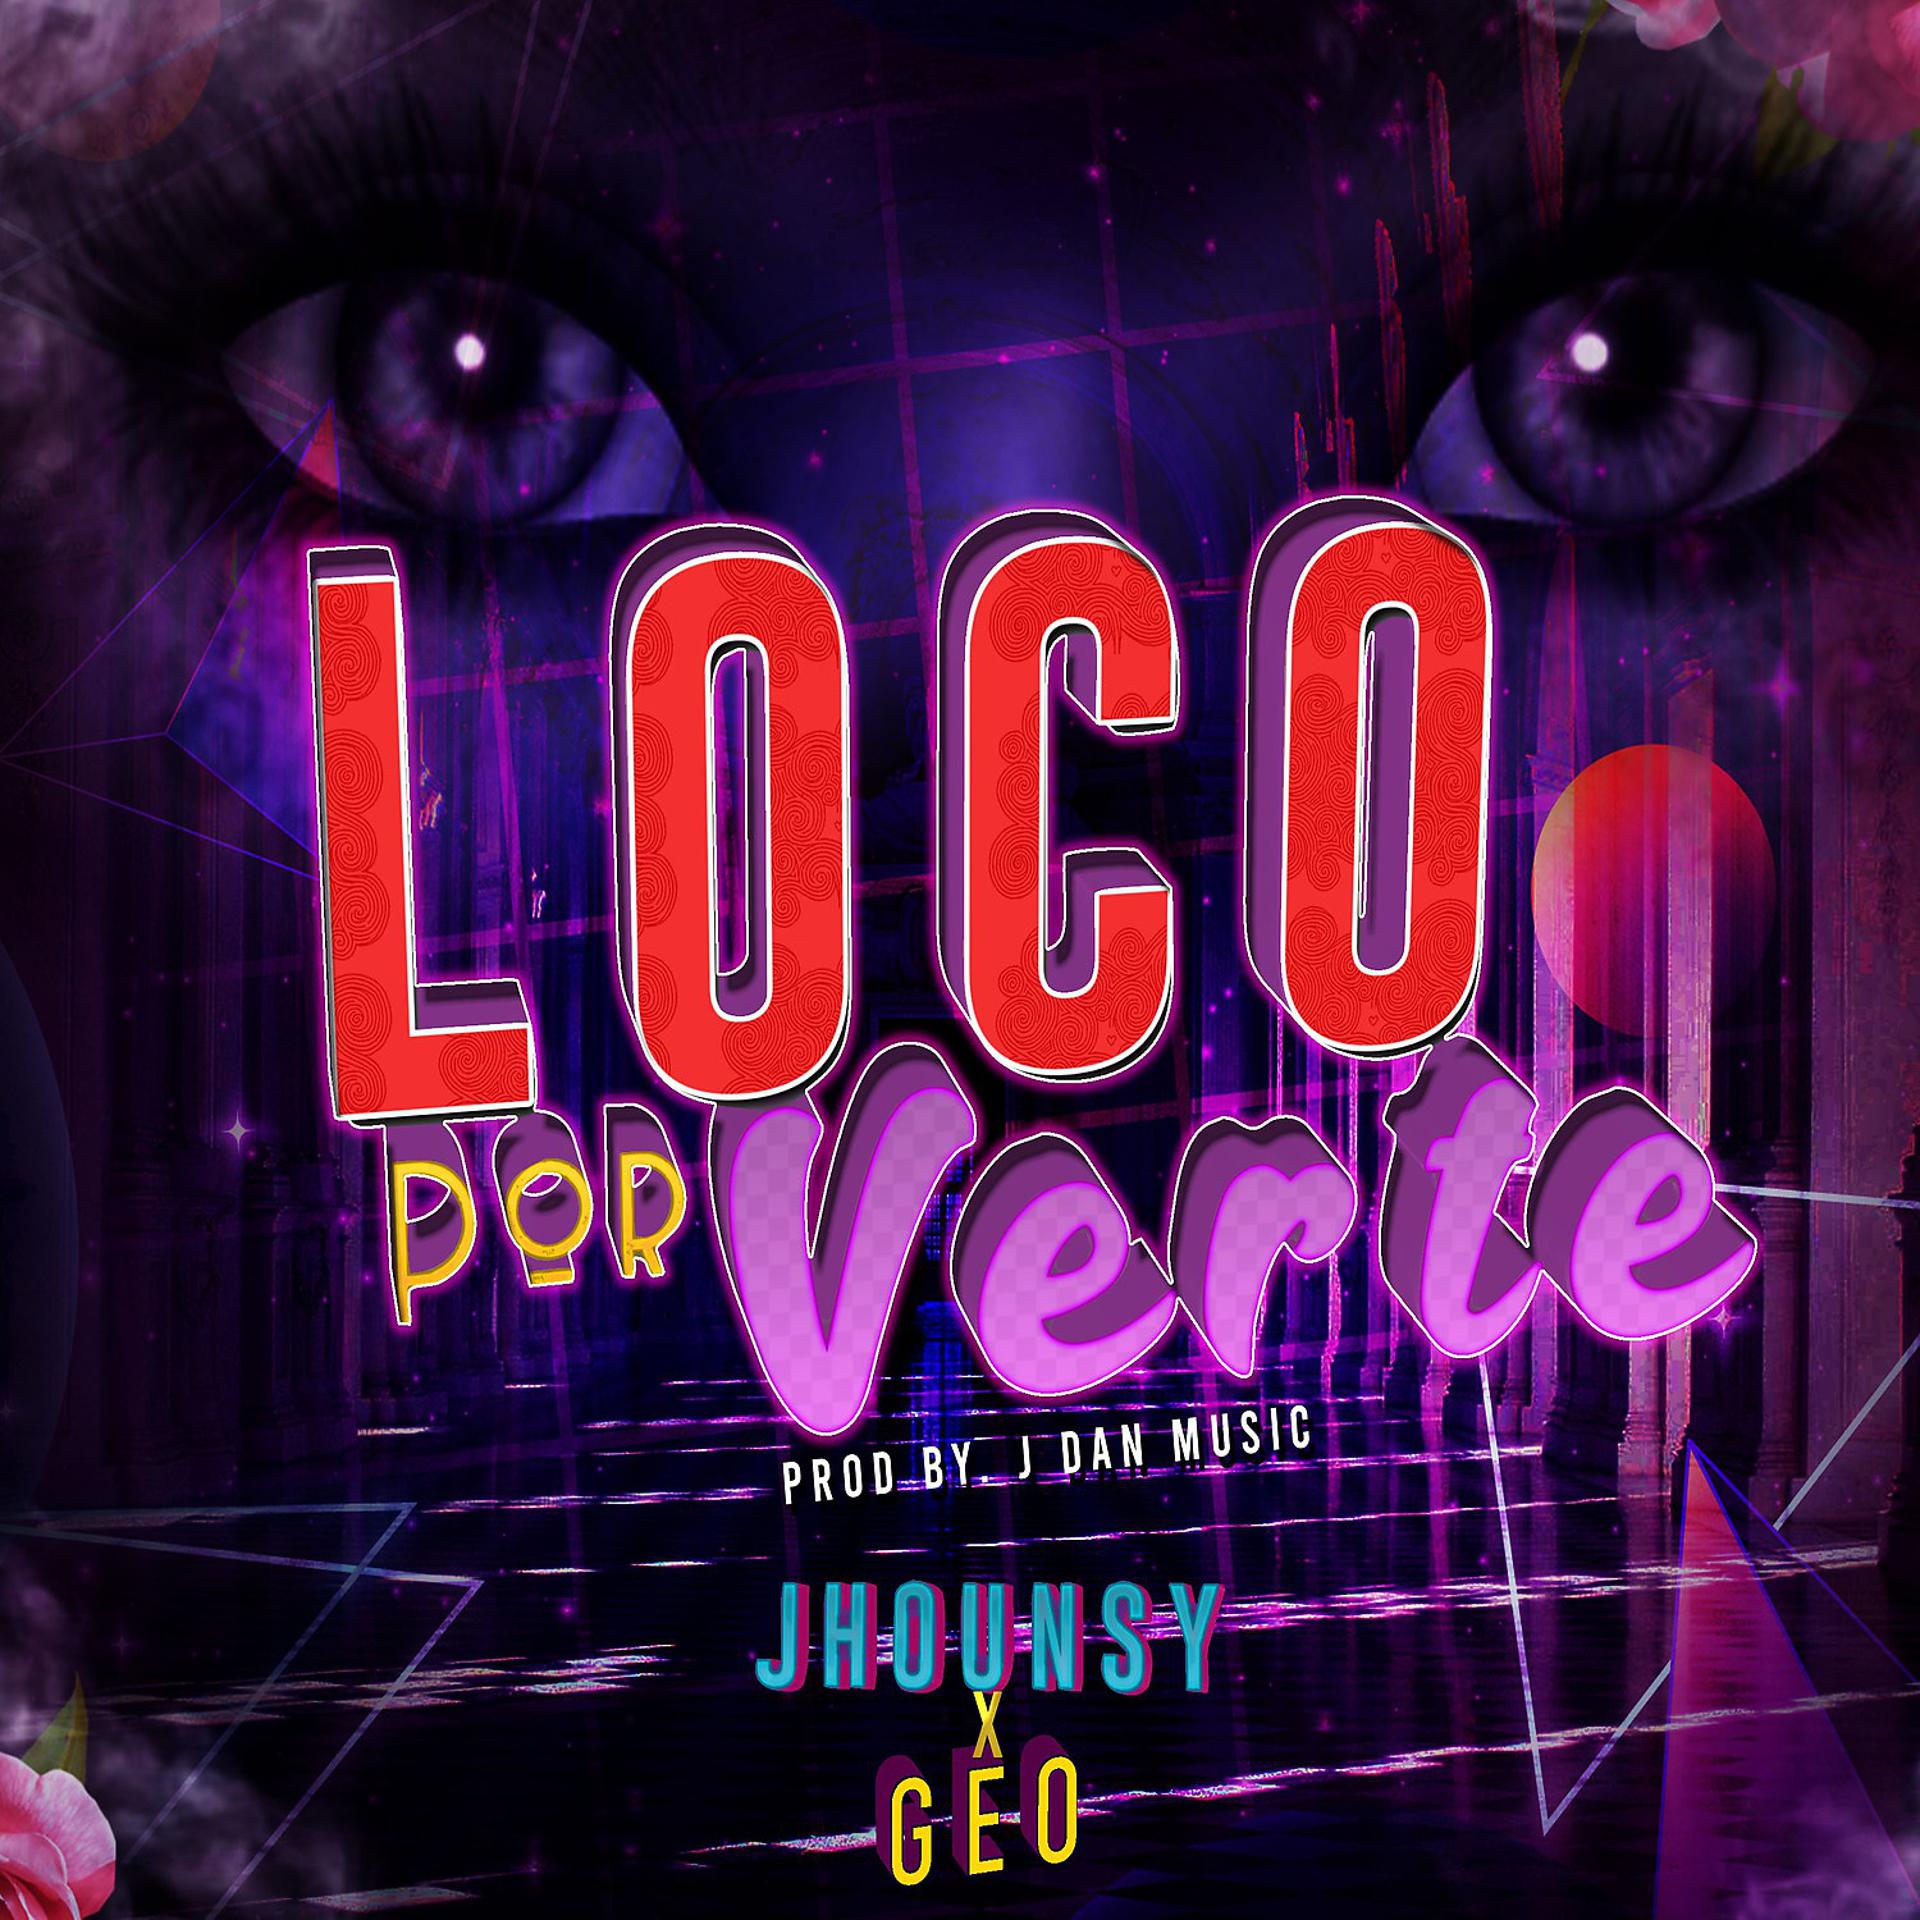 Постер альбома Loco por verte